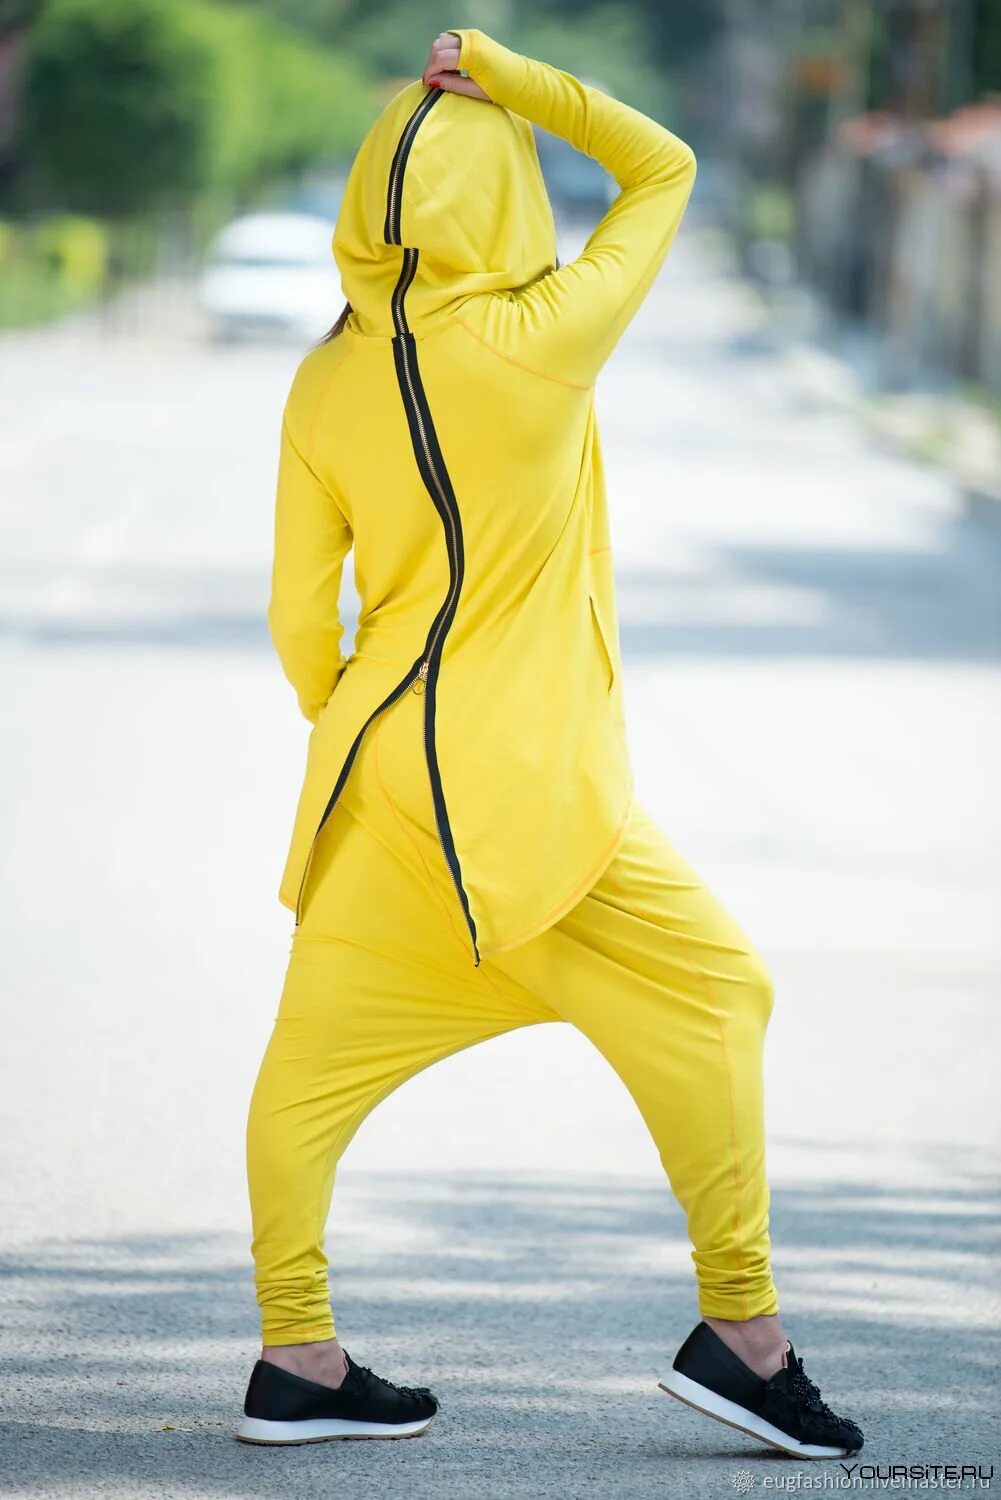 Спортивный костюм адидас женский желтый. Желтый костюм адидас женский. Необычные спортивные костюмы. Спортивный костюм с капюшоном.